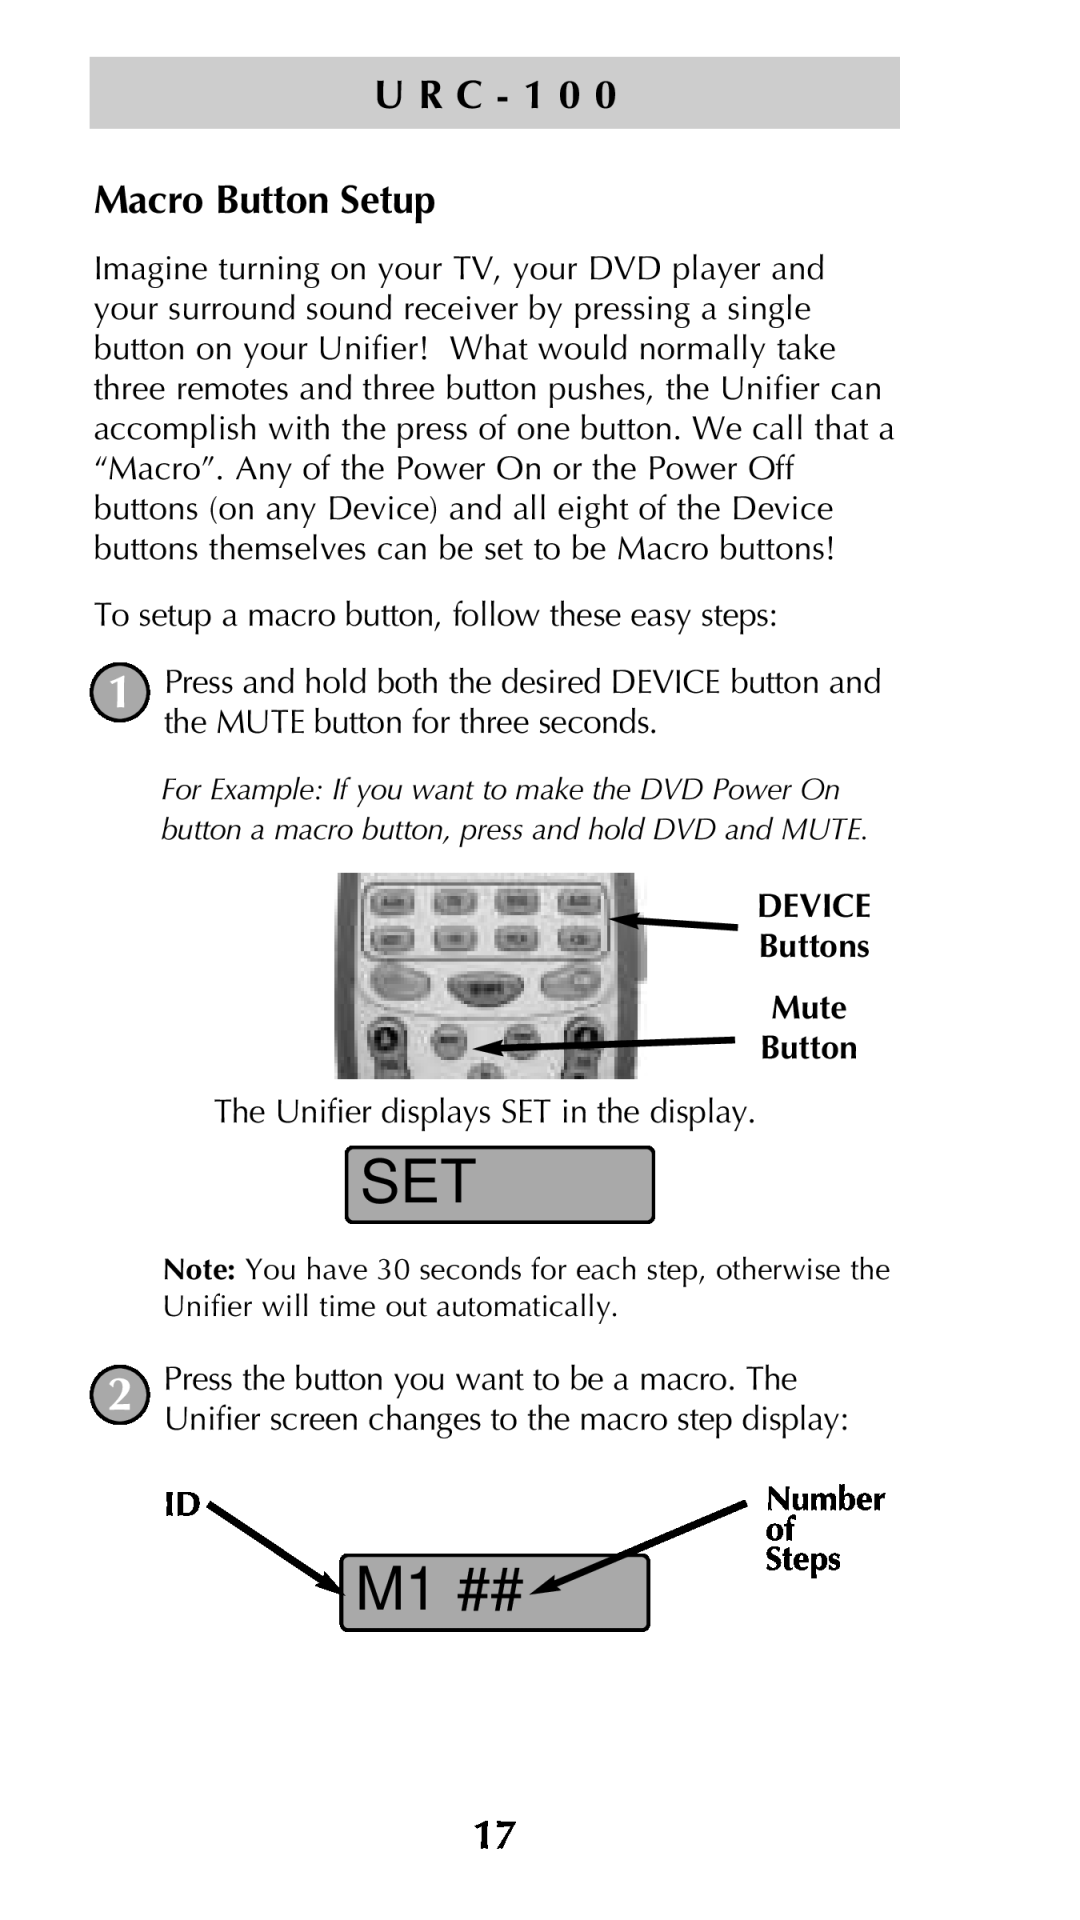 Universal Remote Control Unifier URC-100 owner manual M1 ##, Macro Button Setup, U R C - 1 0 